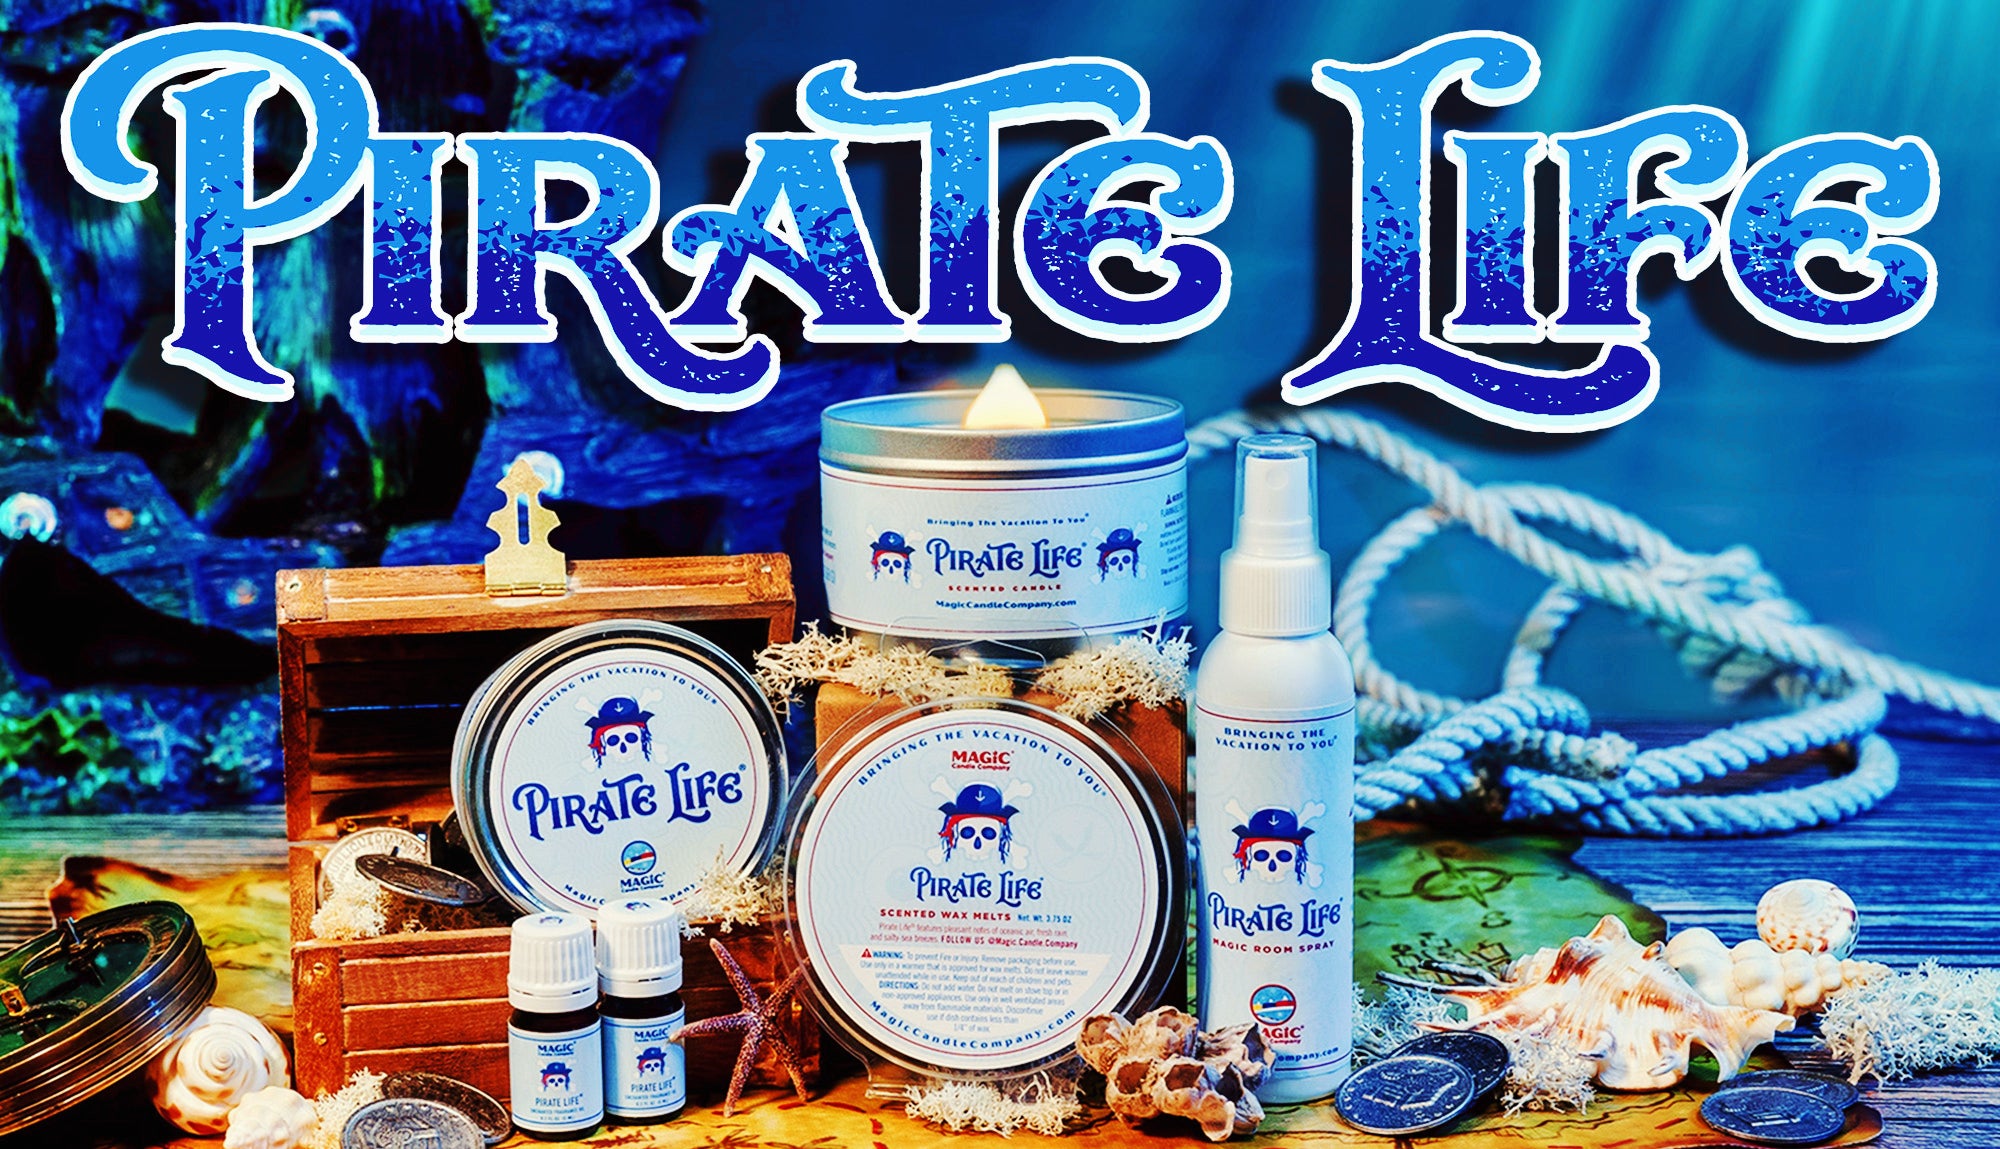 Pirate Life fragrance